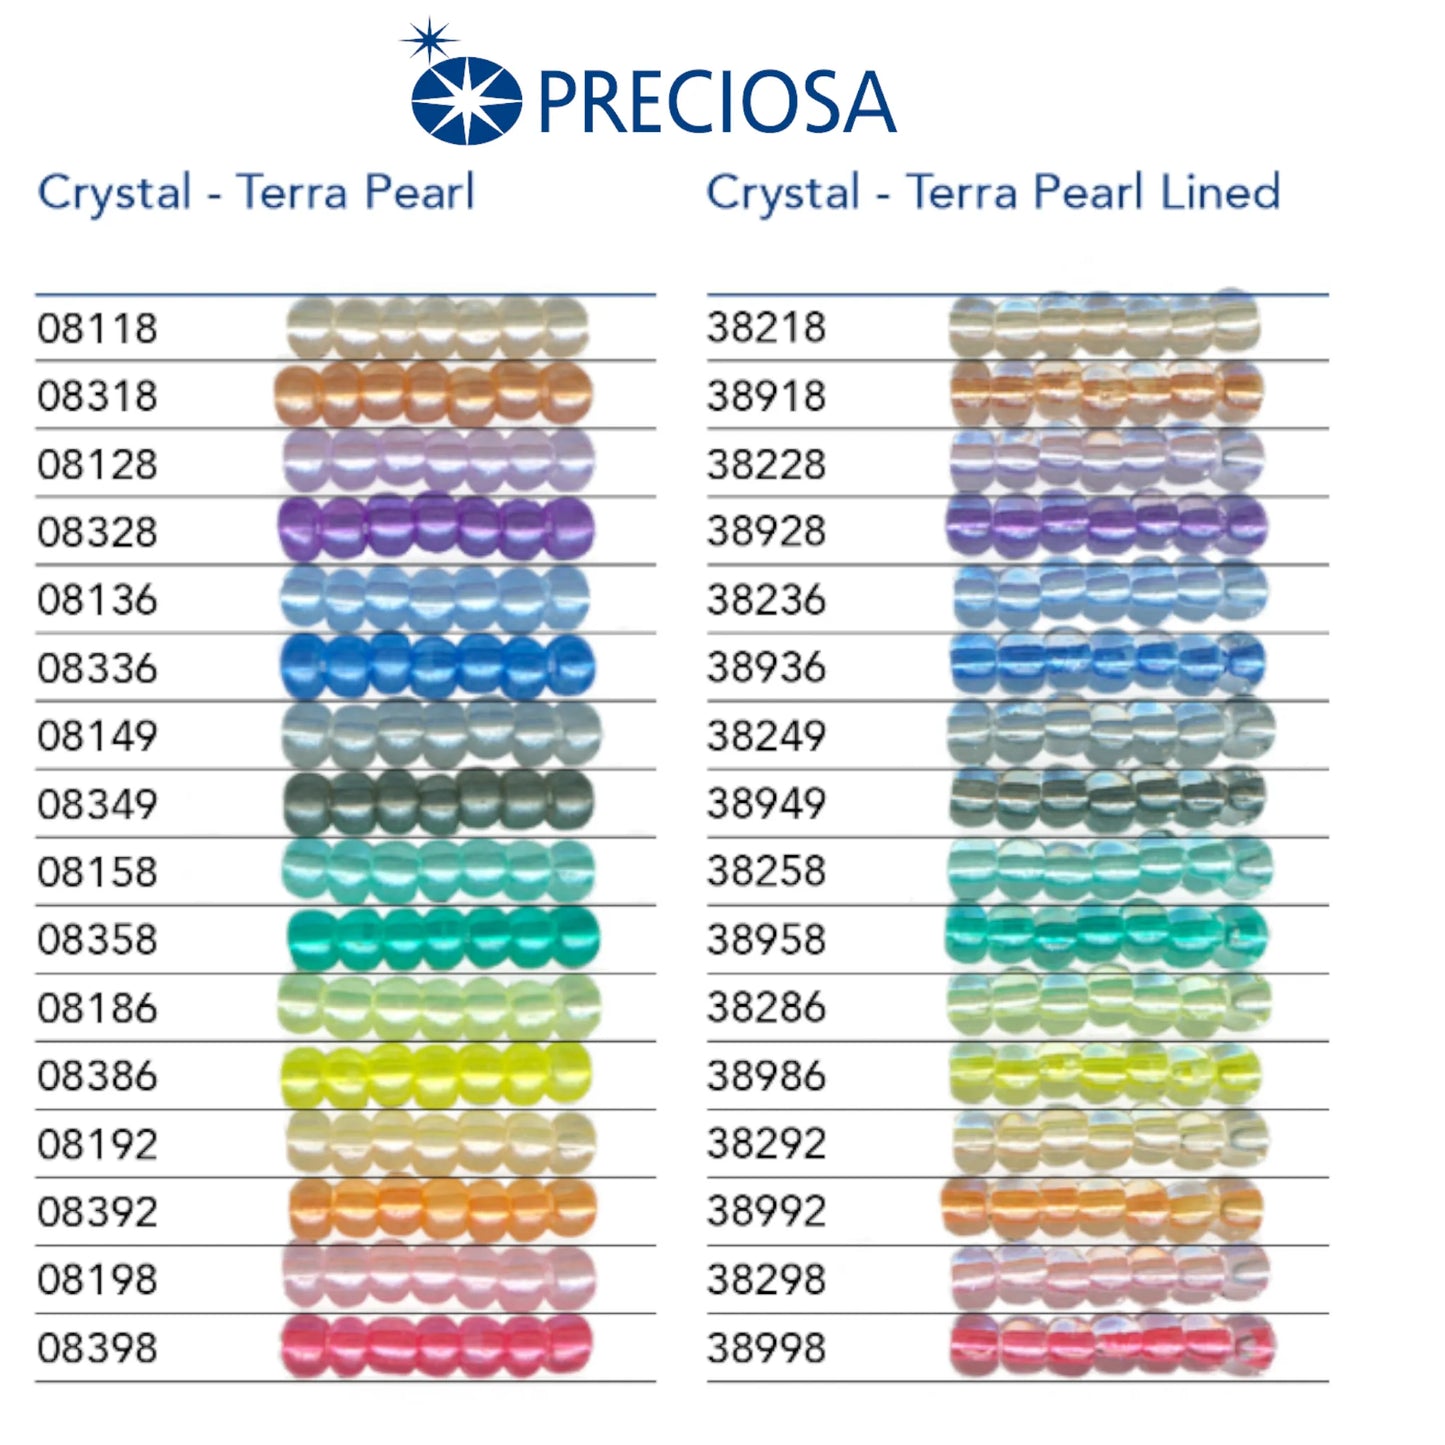 08386 Tschechische Rocailles PRECIOSA Rocailles 10/0 gelb. Kristall - Terra Pearl.